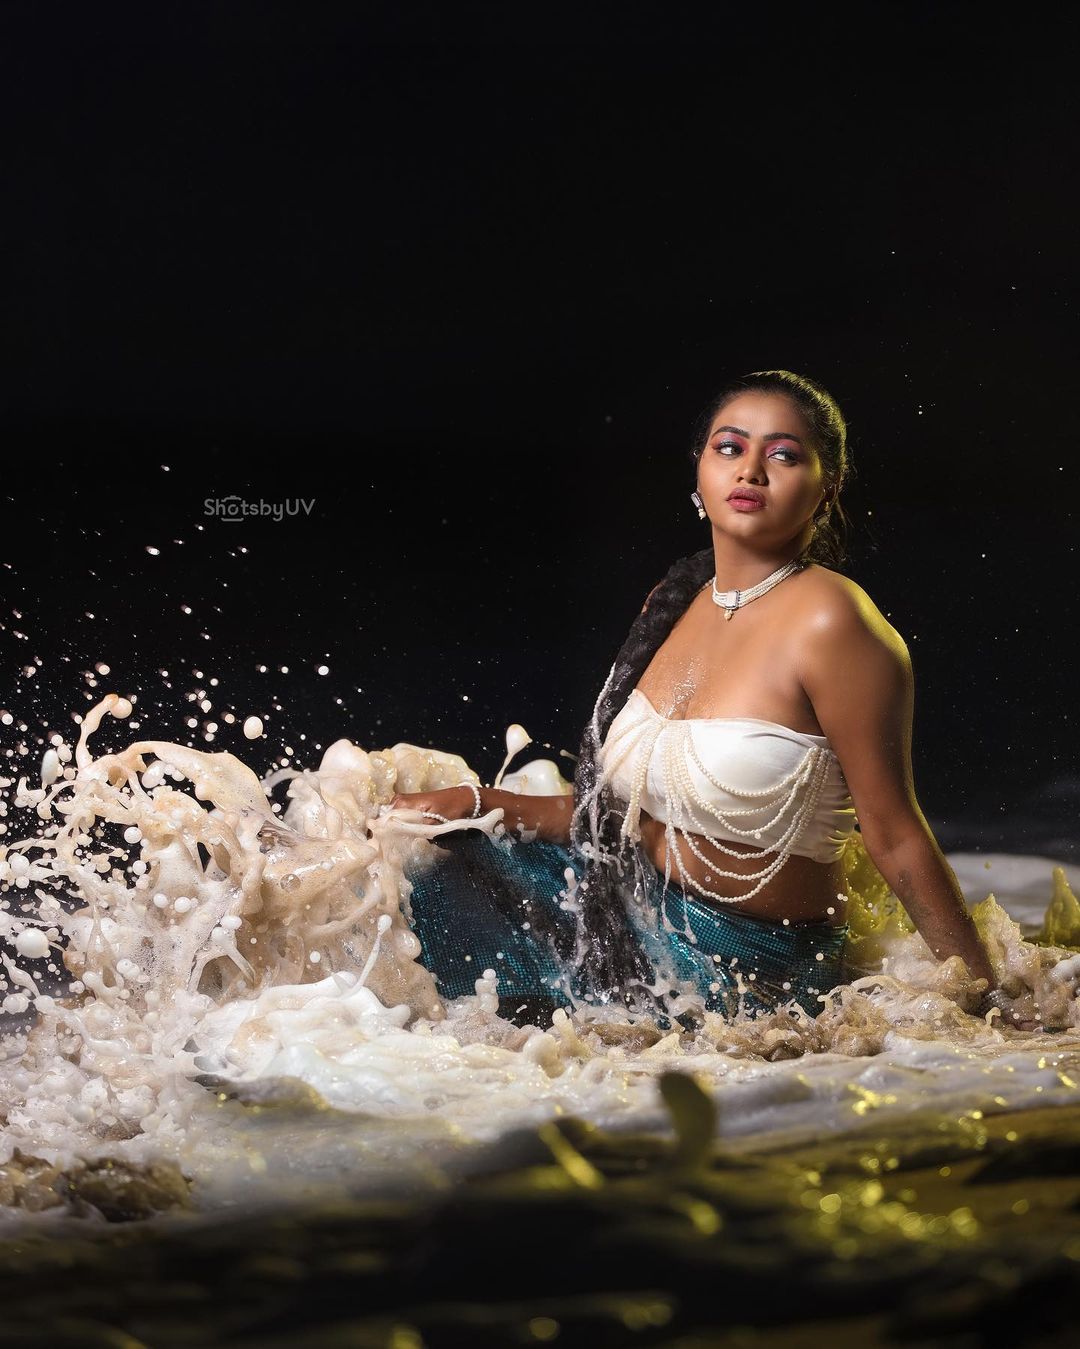 shalu shammu hot photos as mermaid getting viral on social media